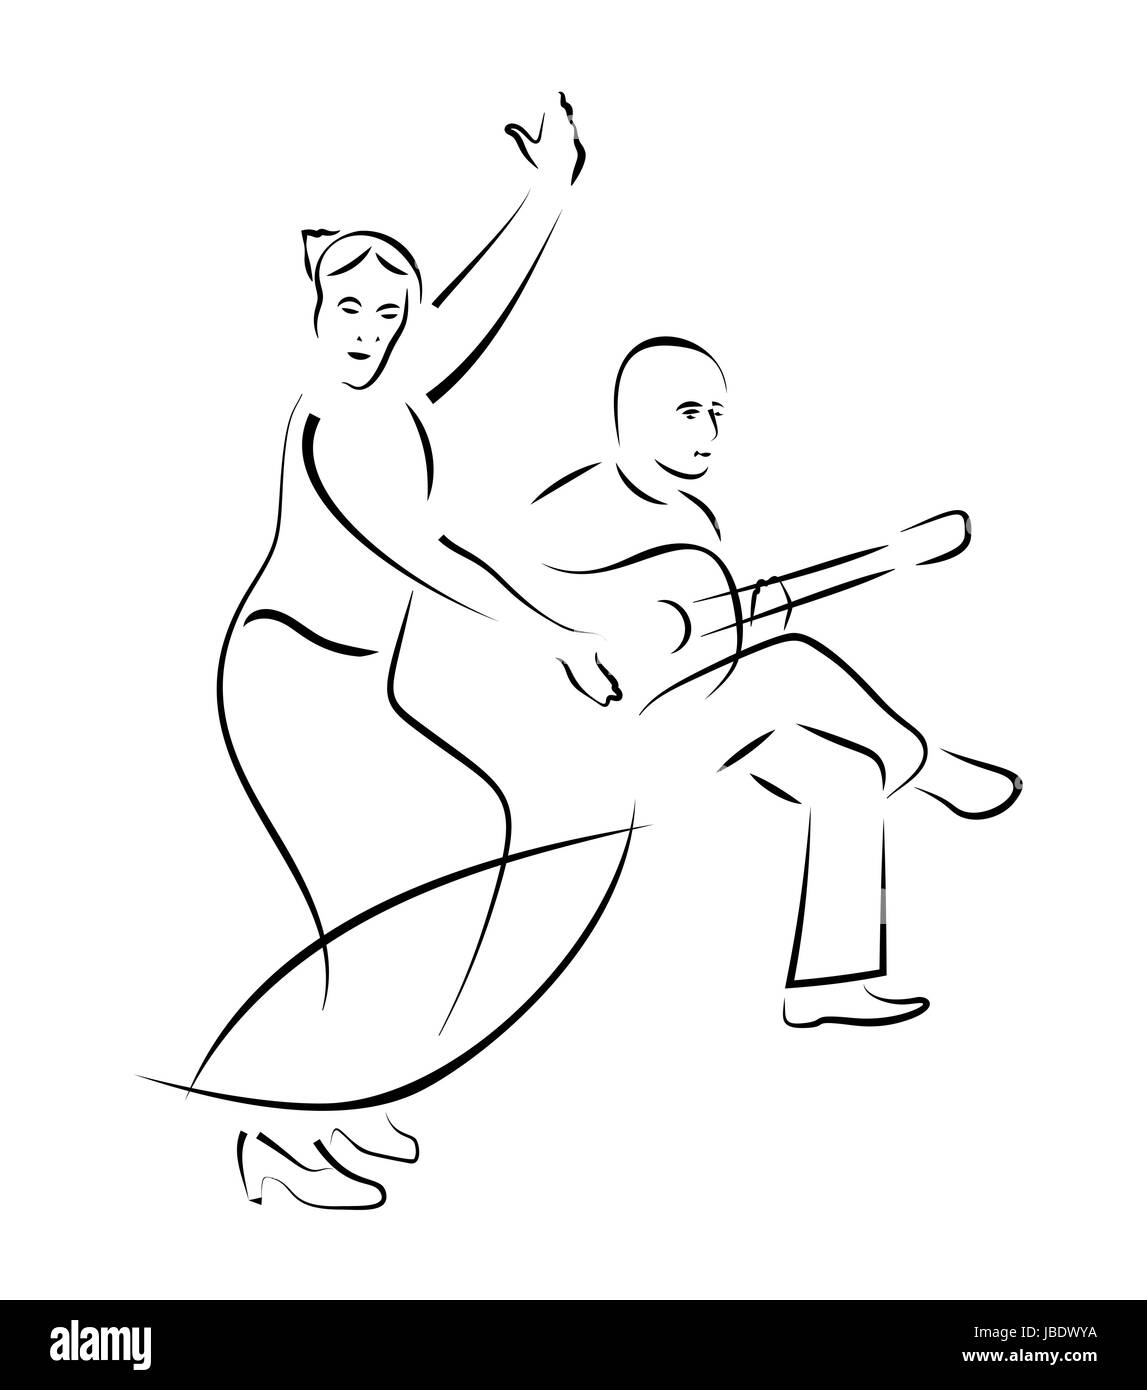 flamenco dancer and guitarist - caligraphy style vector sketch Stock Vector